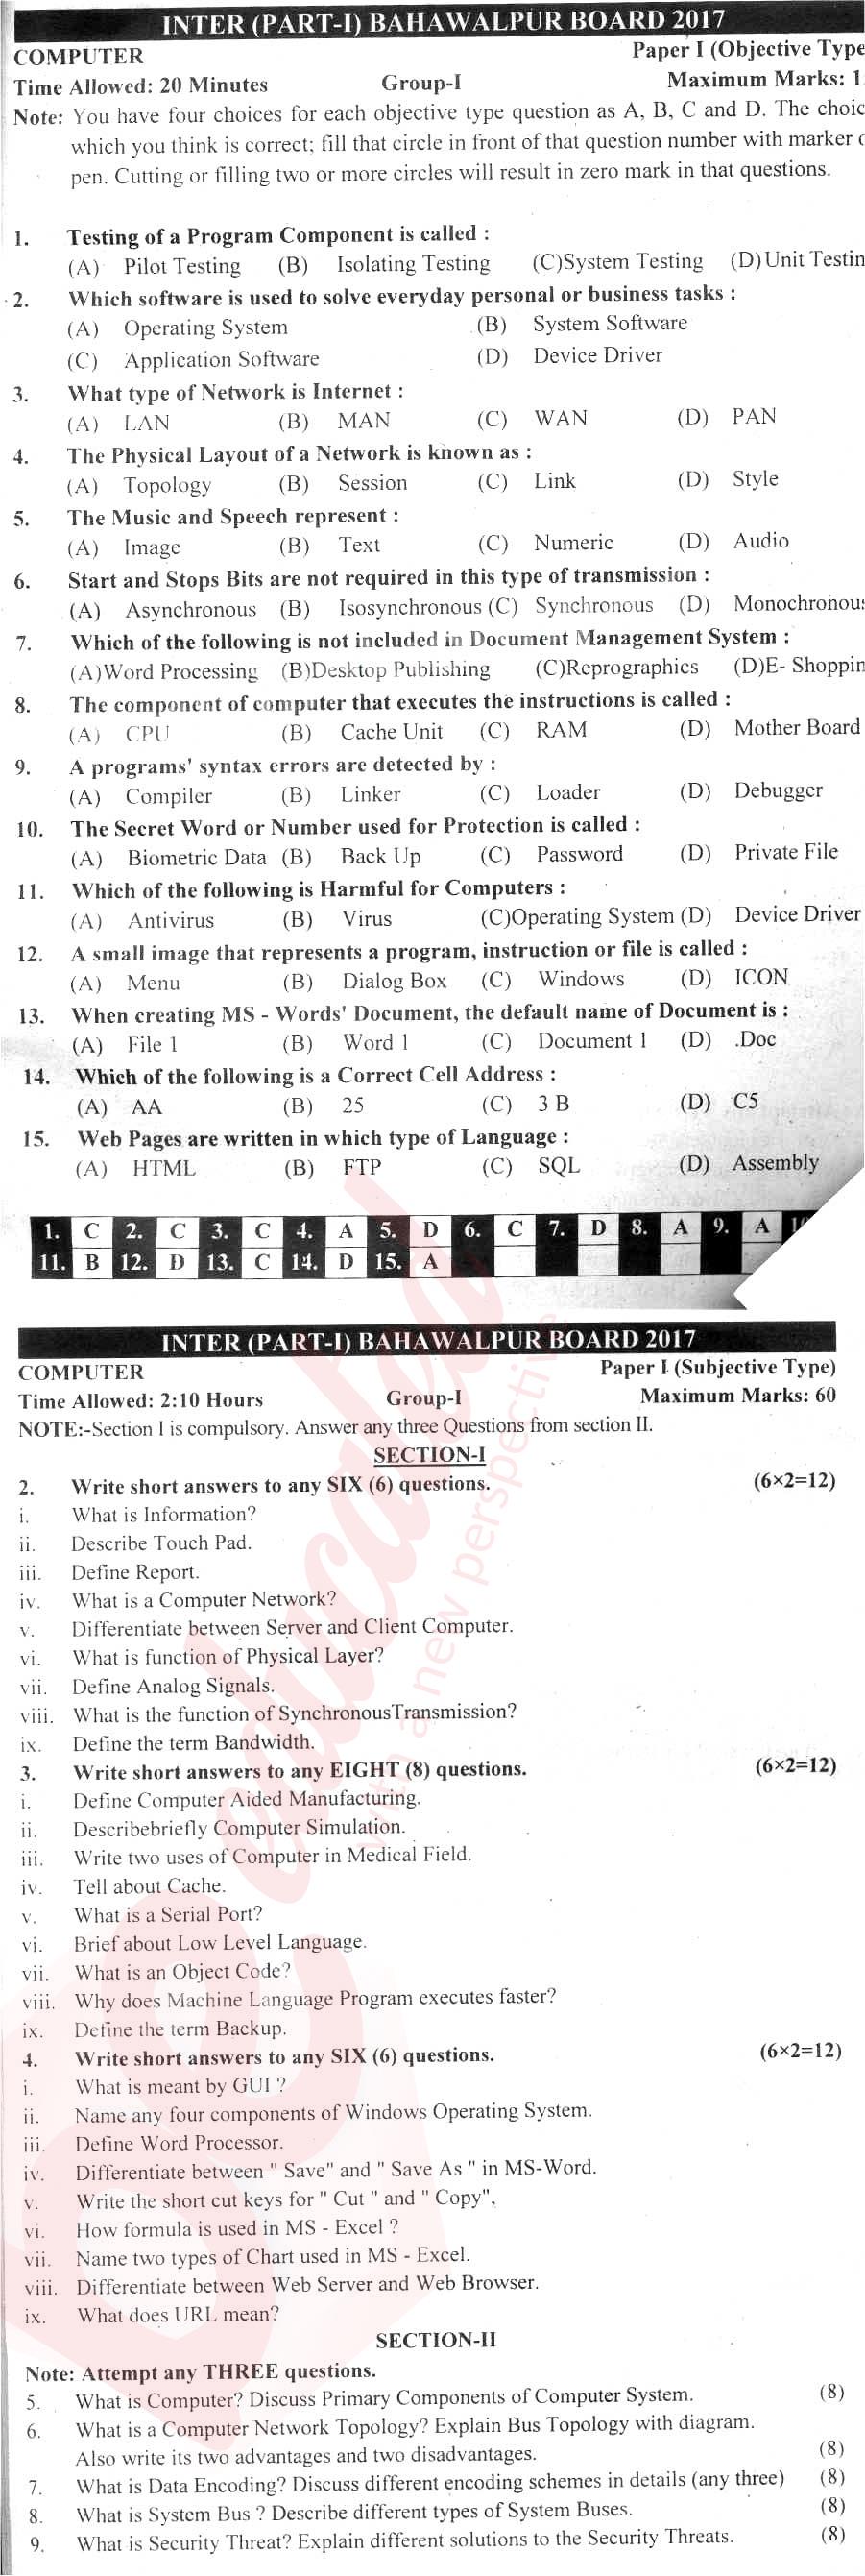 Computer Science ICS Part 1 Past Paper Group 1 BISE Bahawalpur 2017